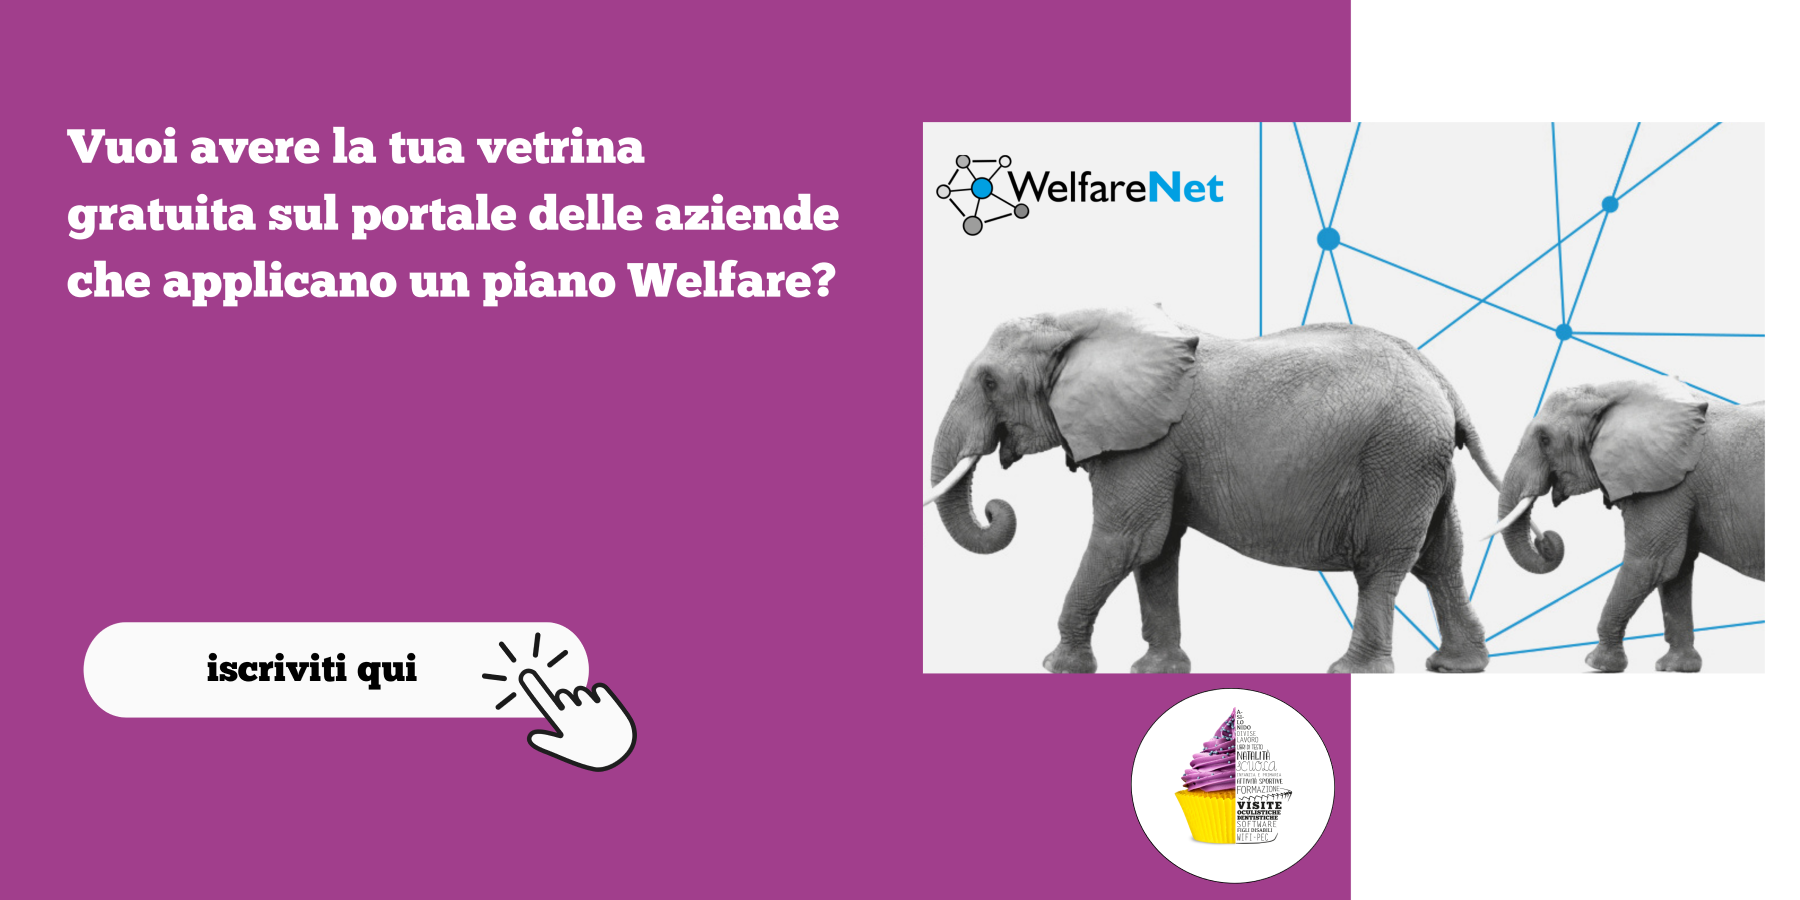 Welfarenet - iscrizione